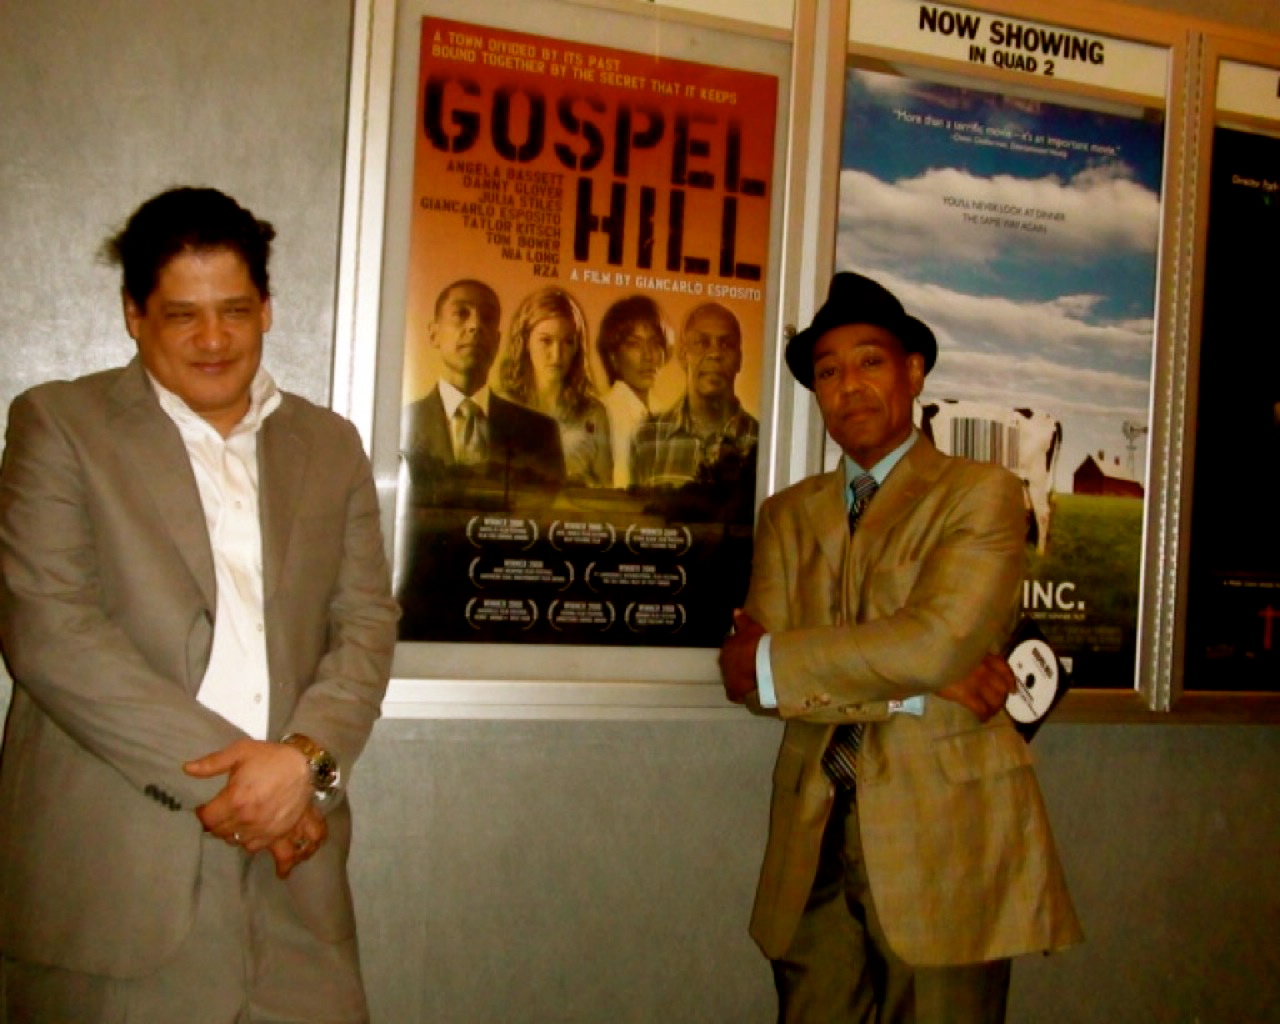 Francisco De Arriba/Giancarlo Esposito at Gospel Hill Premier. NYC 2008